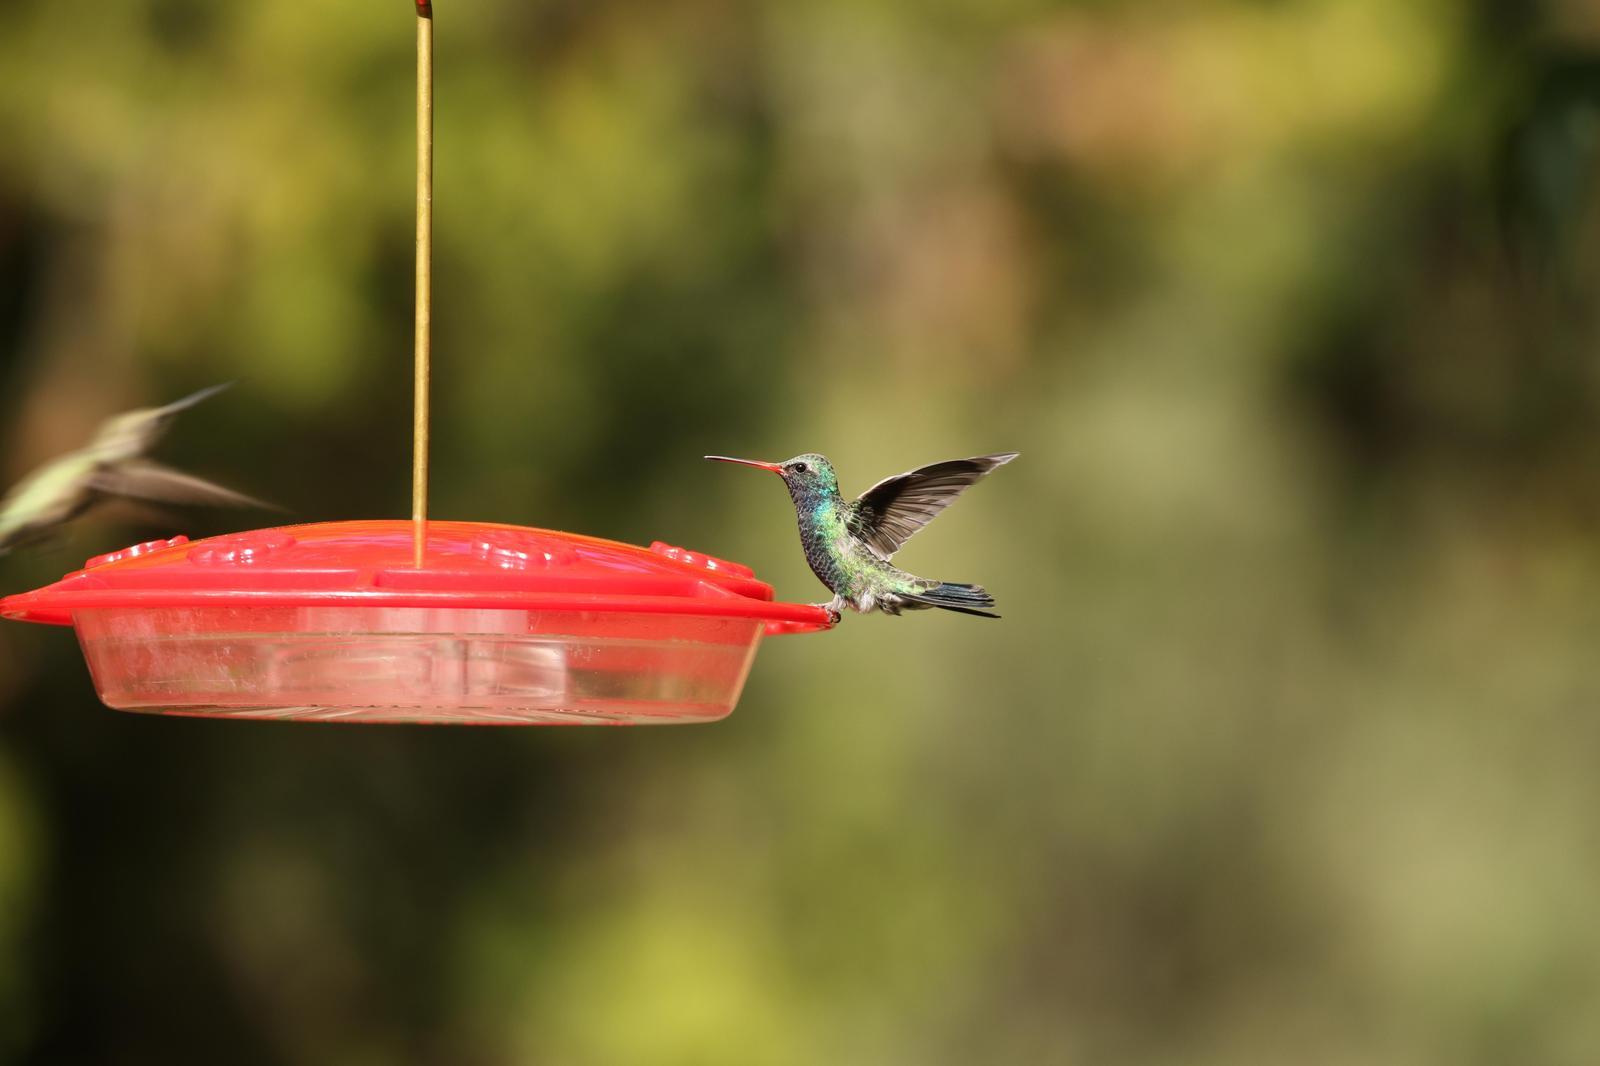 Broad-billed Hummingbird Photo by Kristy Baker